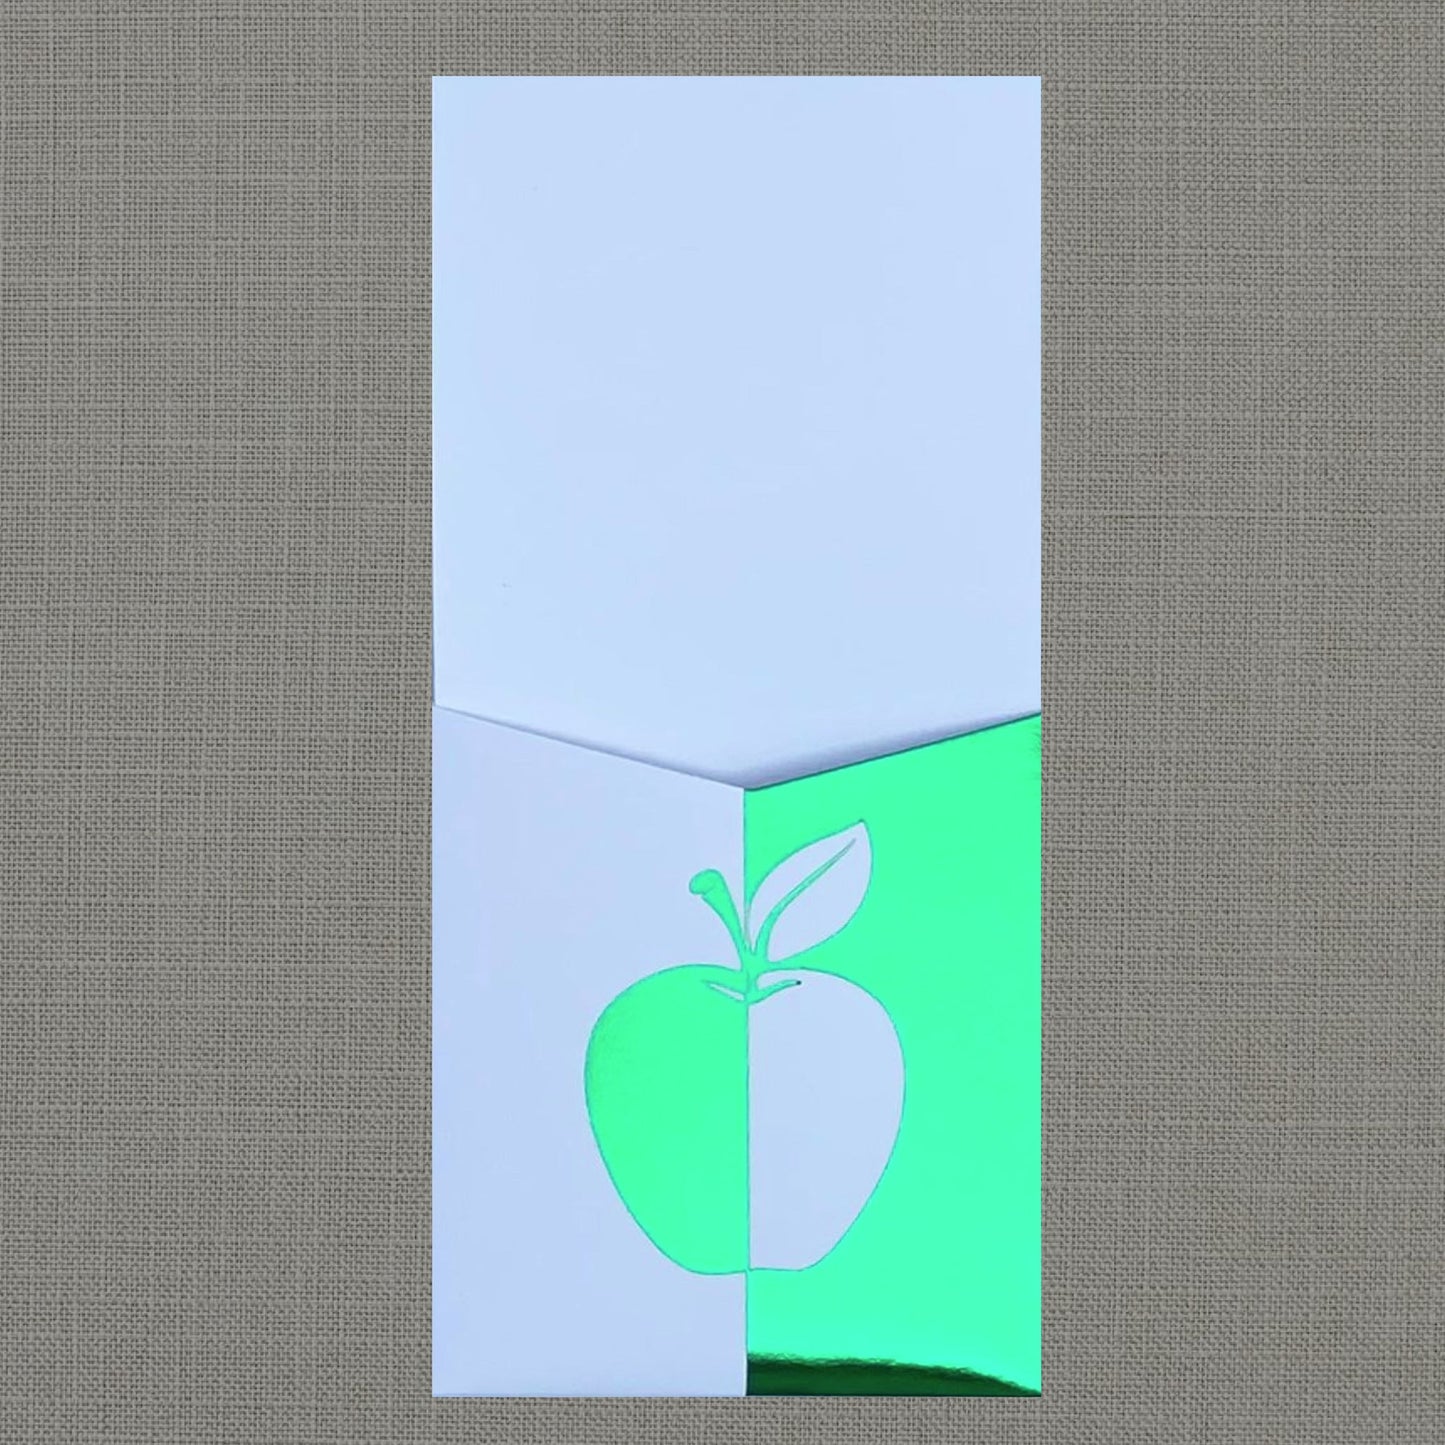 Foil Mondrian Apples - Cutlery Pouch